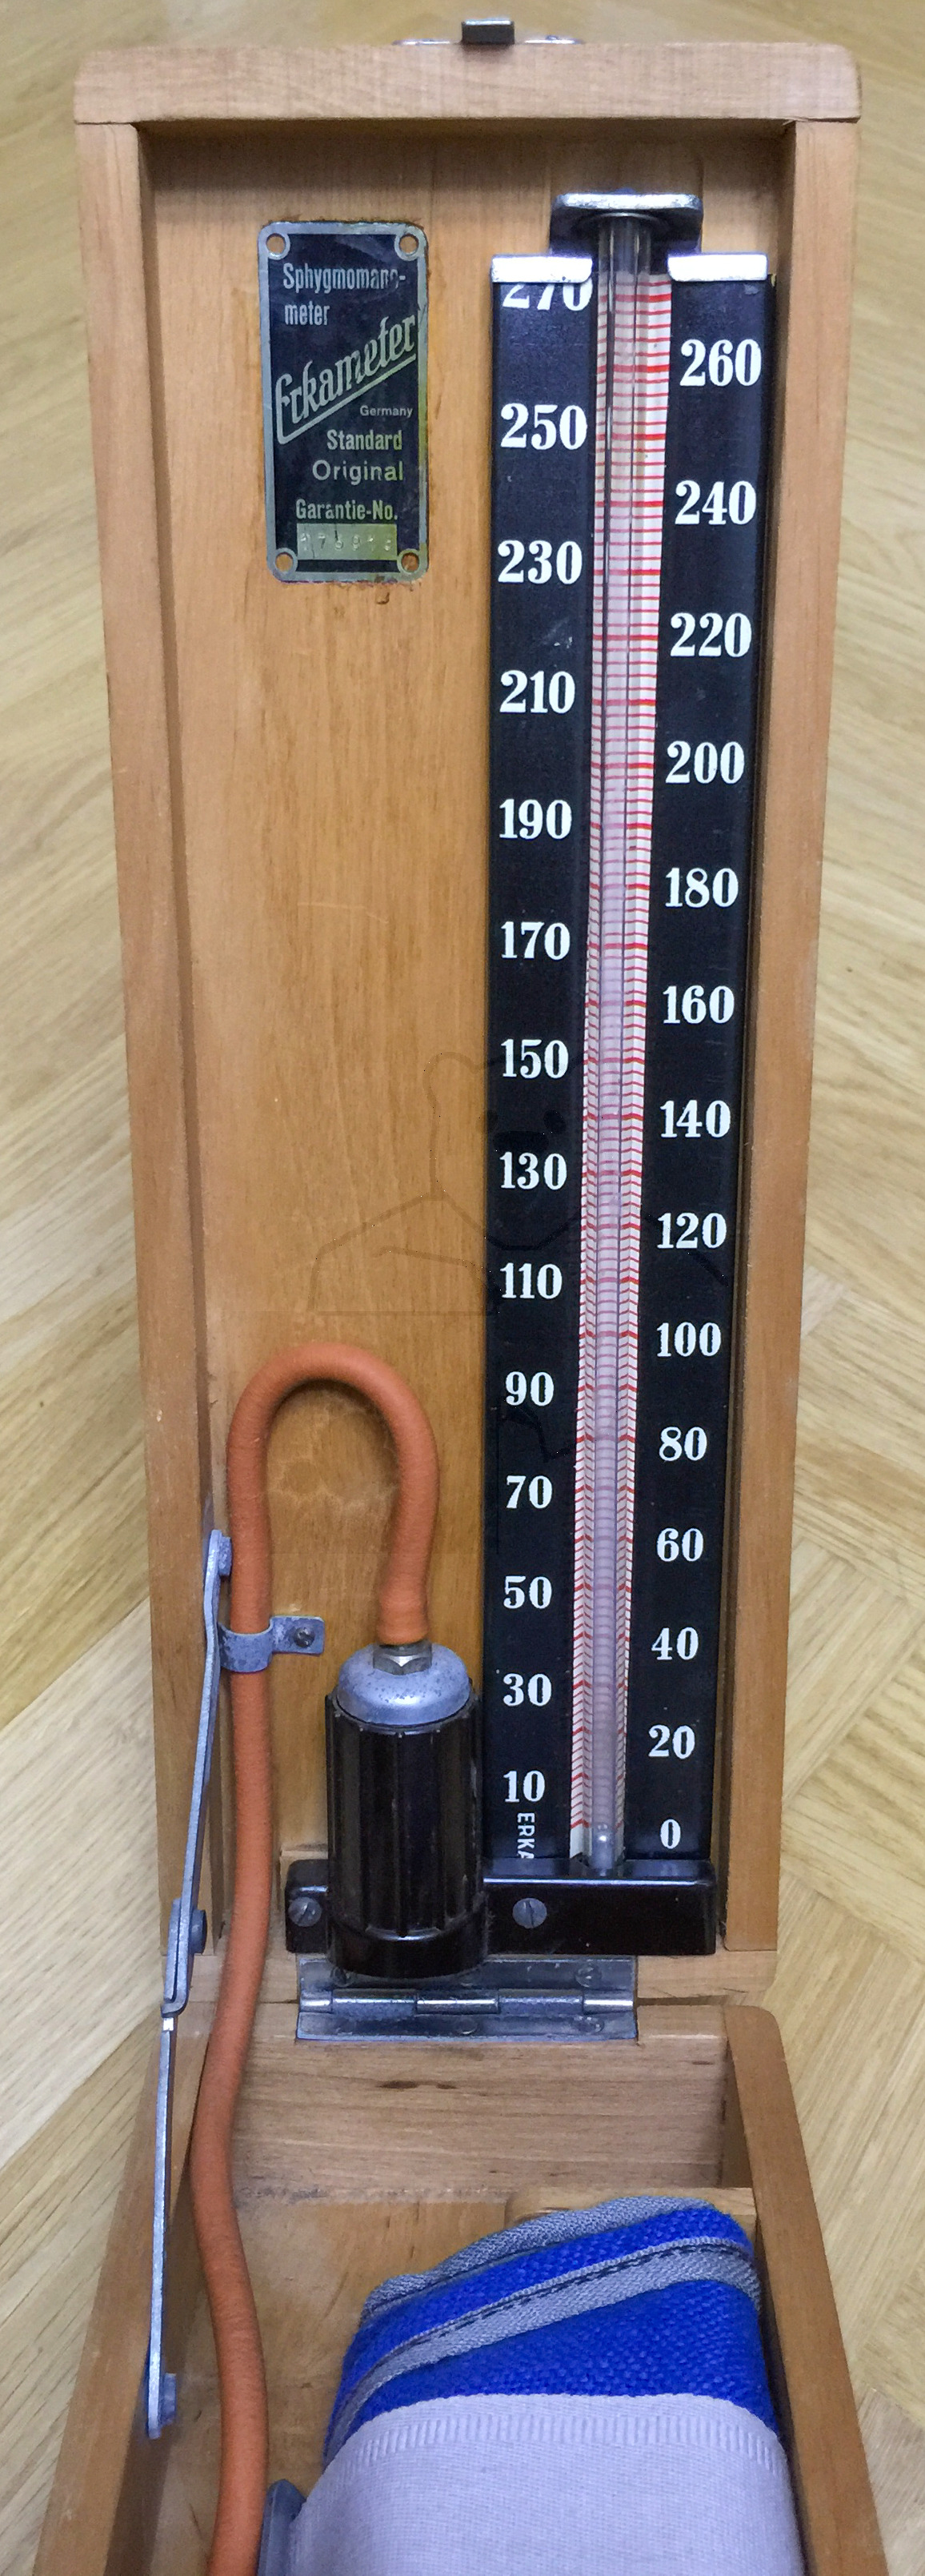 Erka Standard Blutdruckmesser (Sphygmomanometer), Originalzustand, 1940'er Jahre, Ansicht Skala